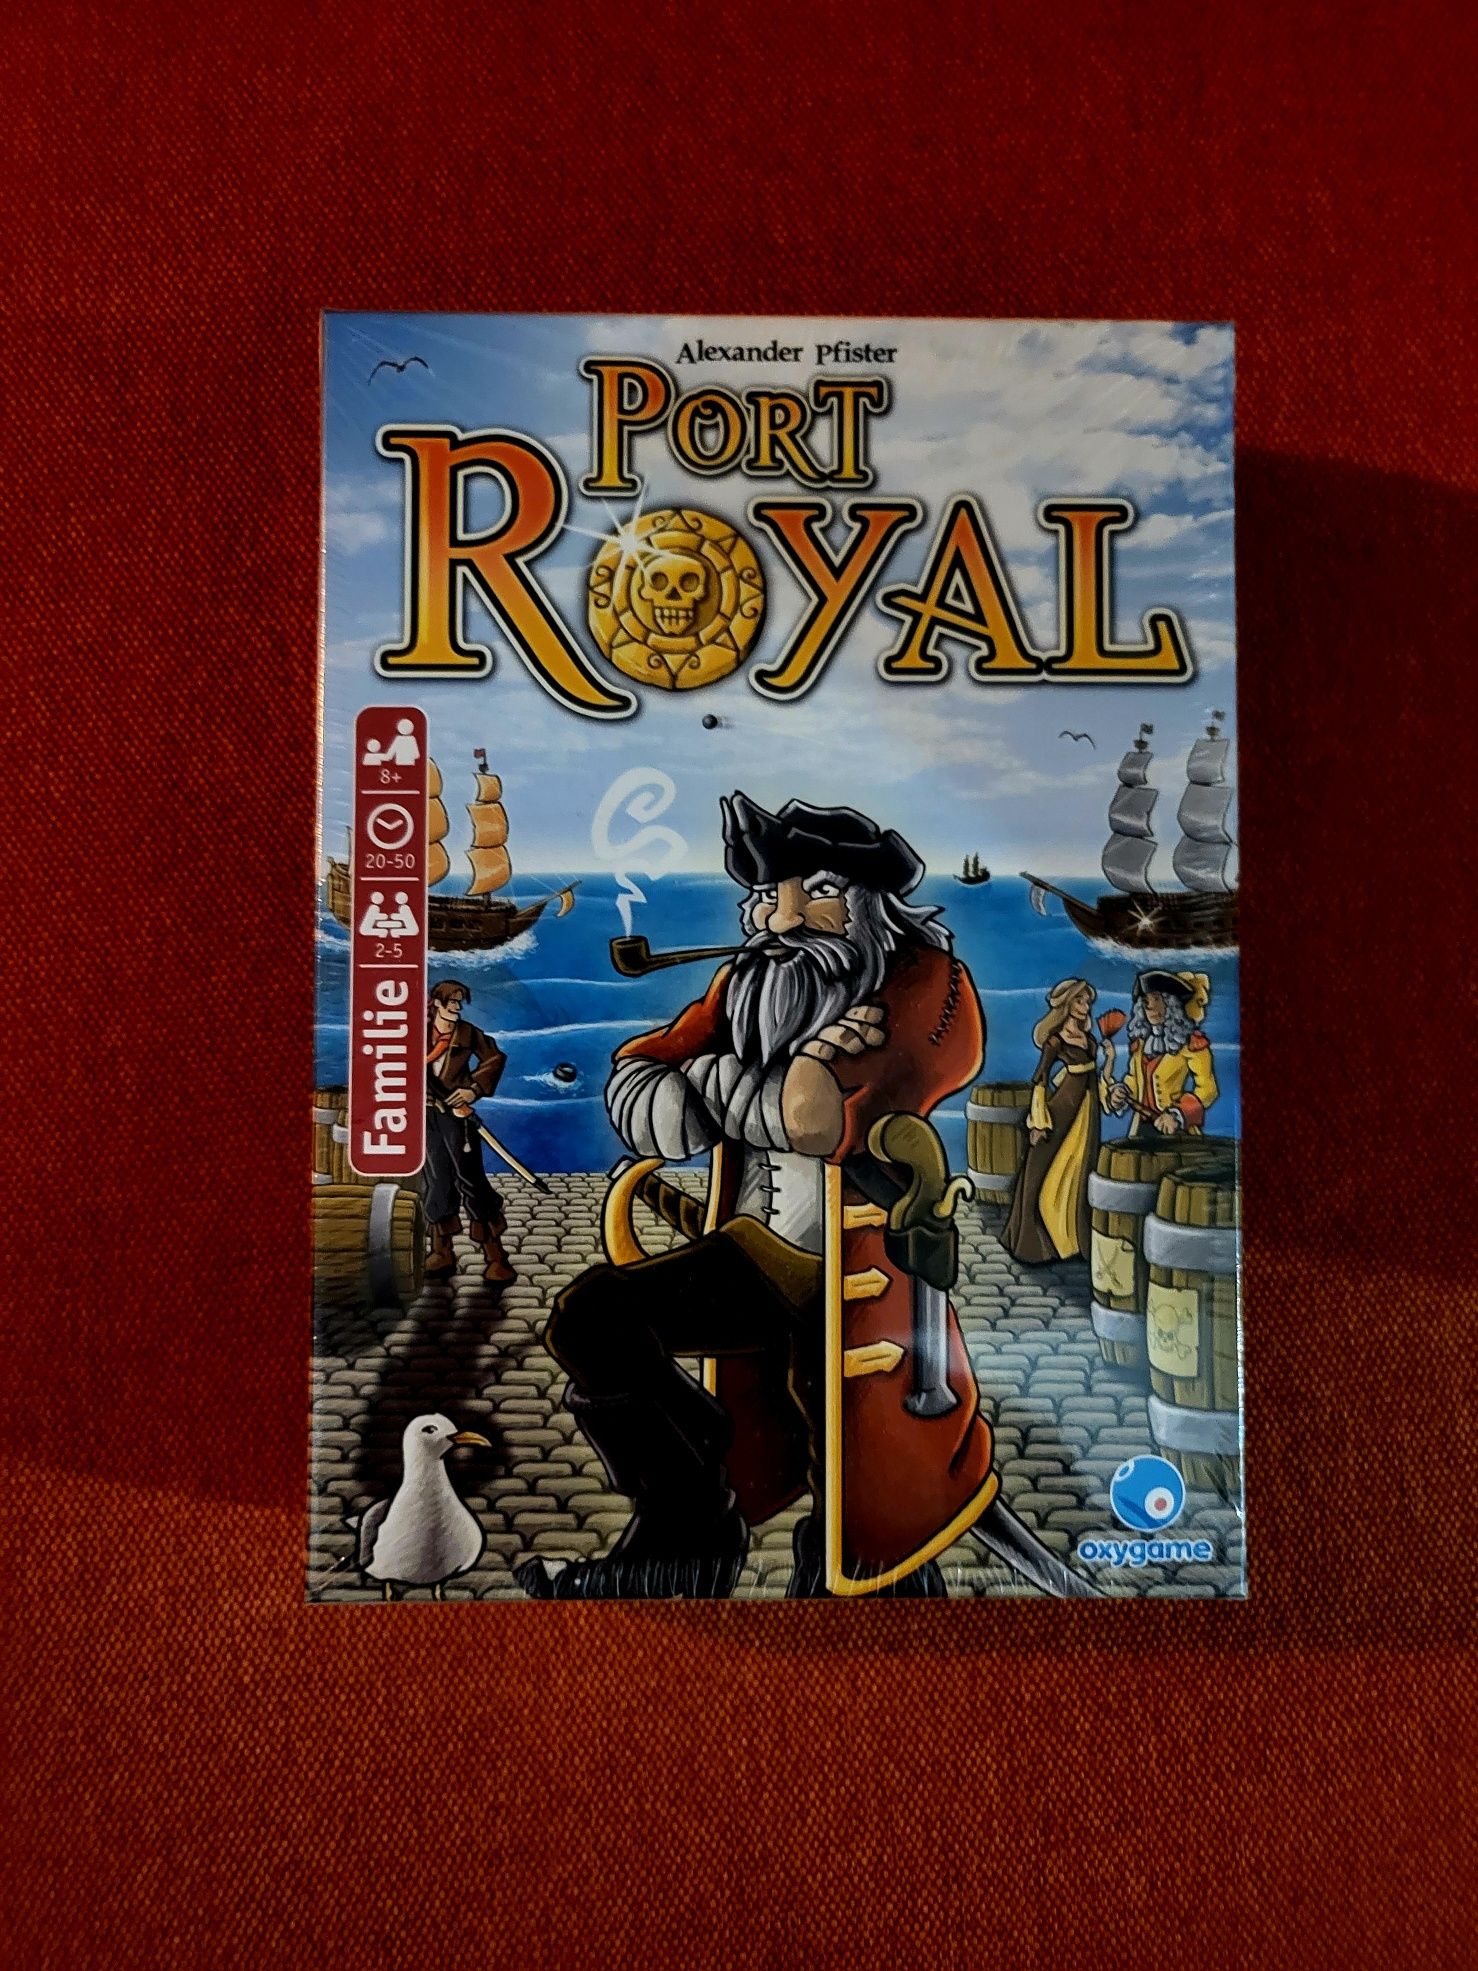 Vand boardgame Port Royal BGG 7.1